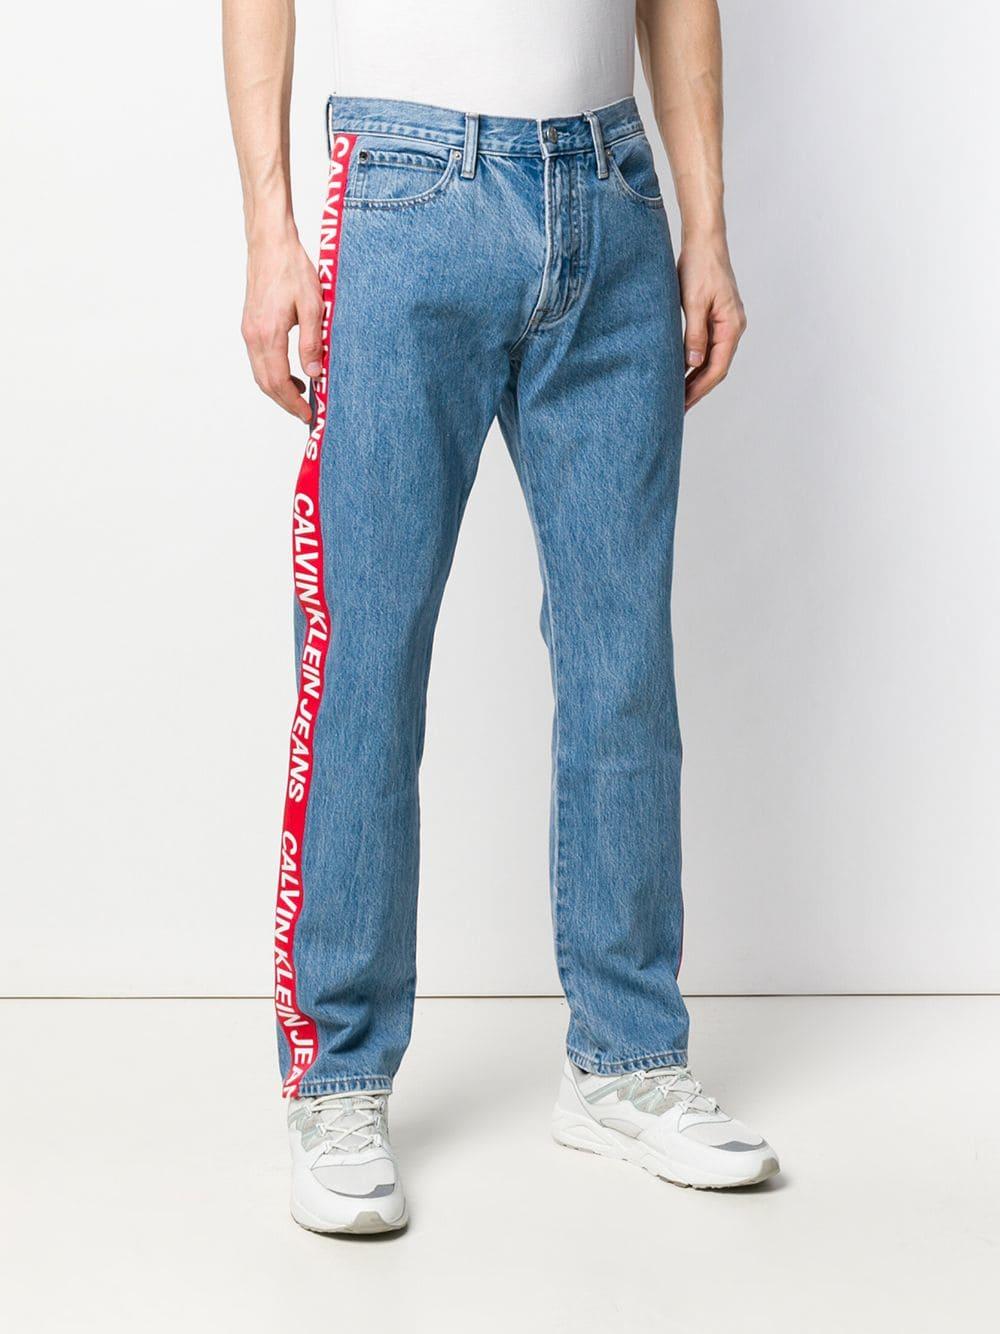 Calvin Klein Denim Logo Stripe Jeans in Blue for Men - Lyst